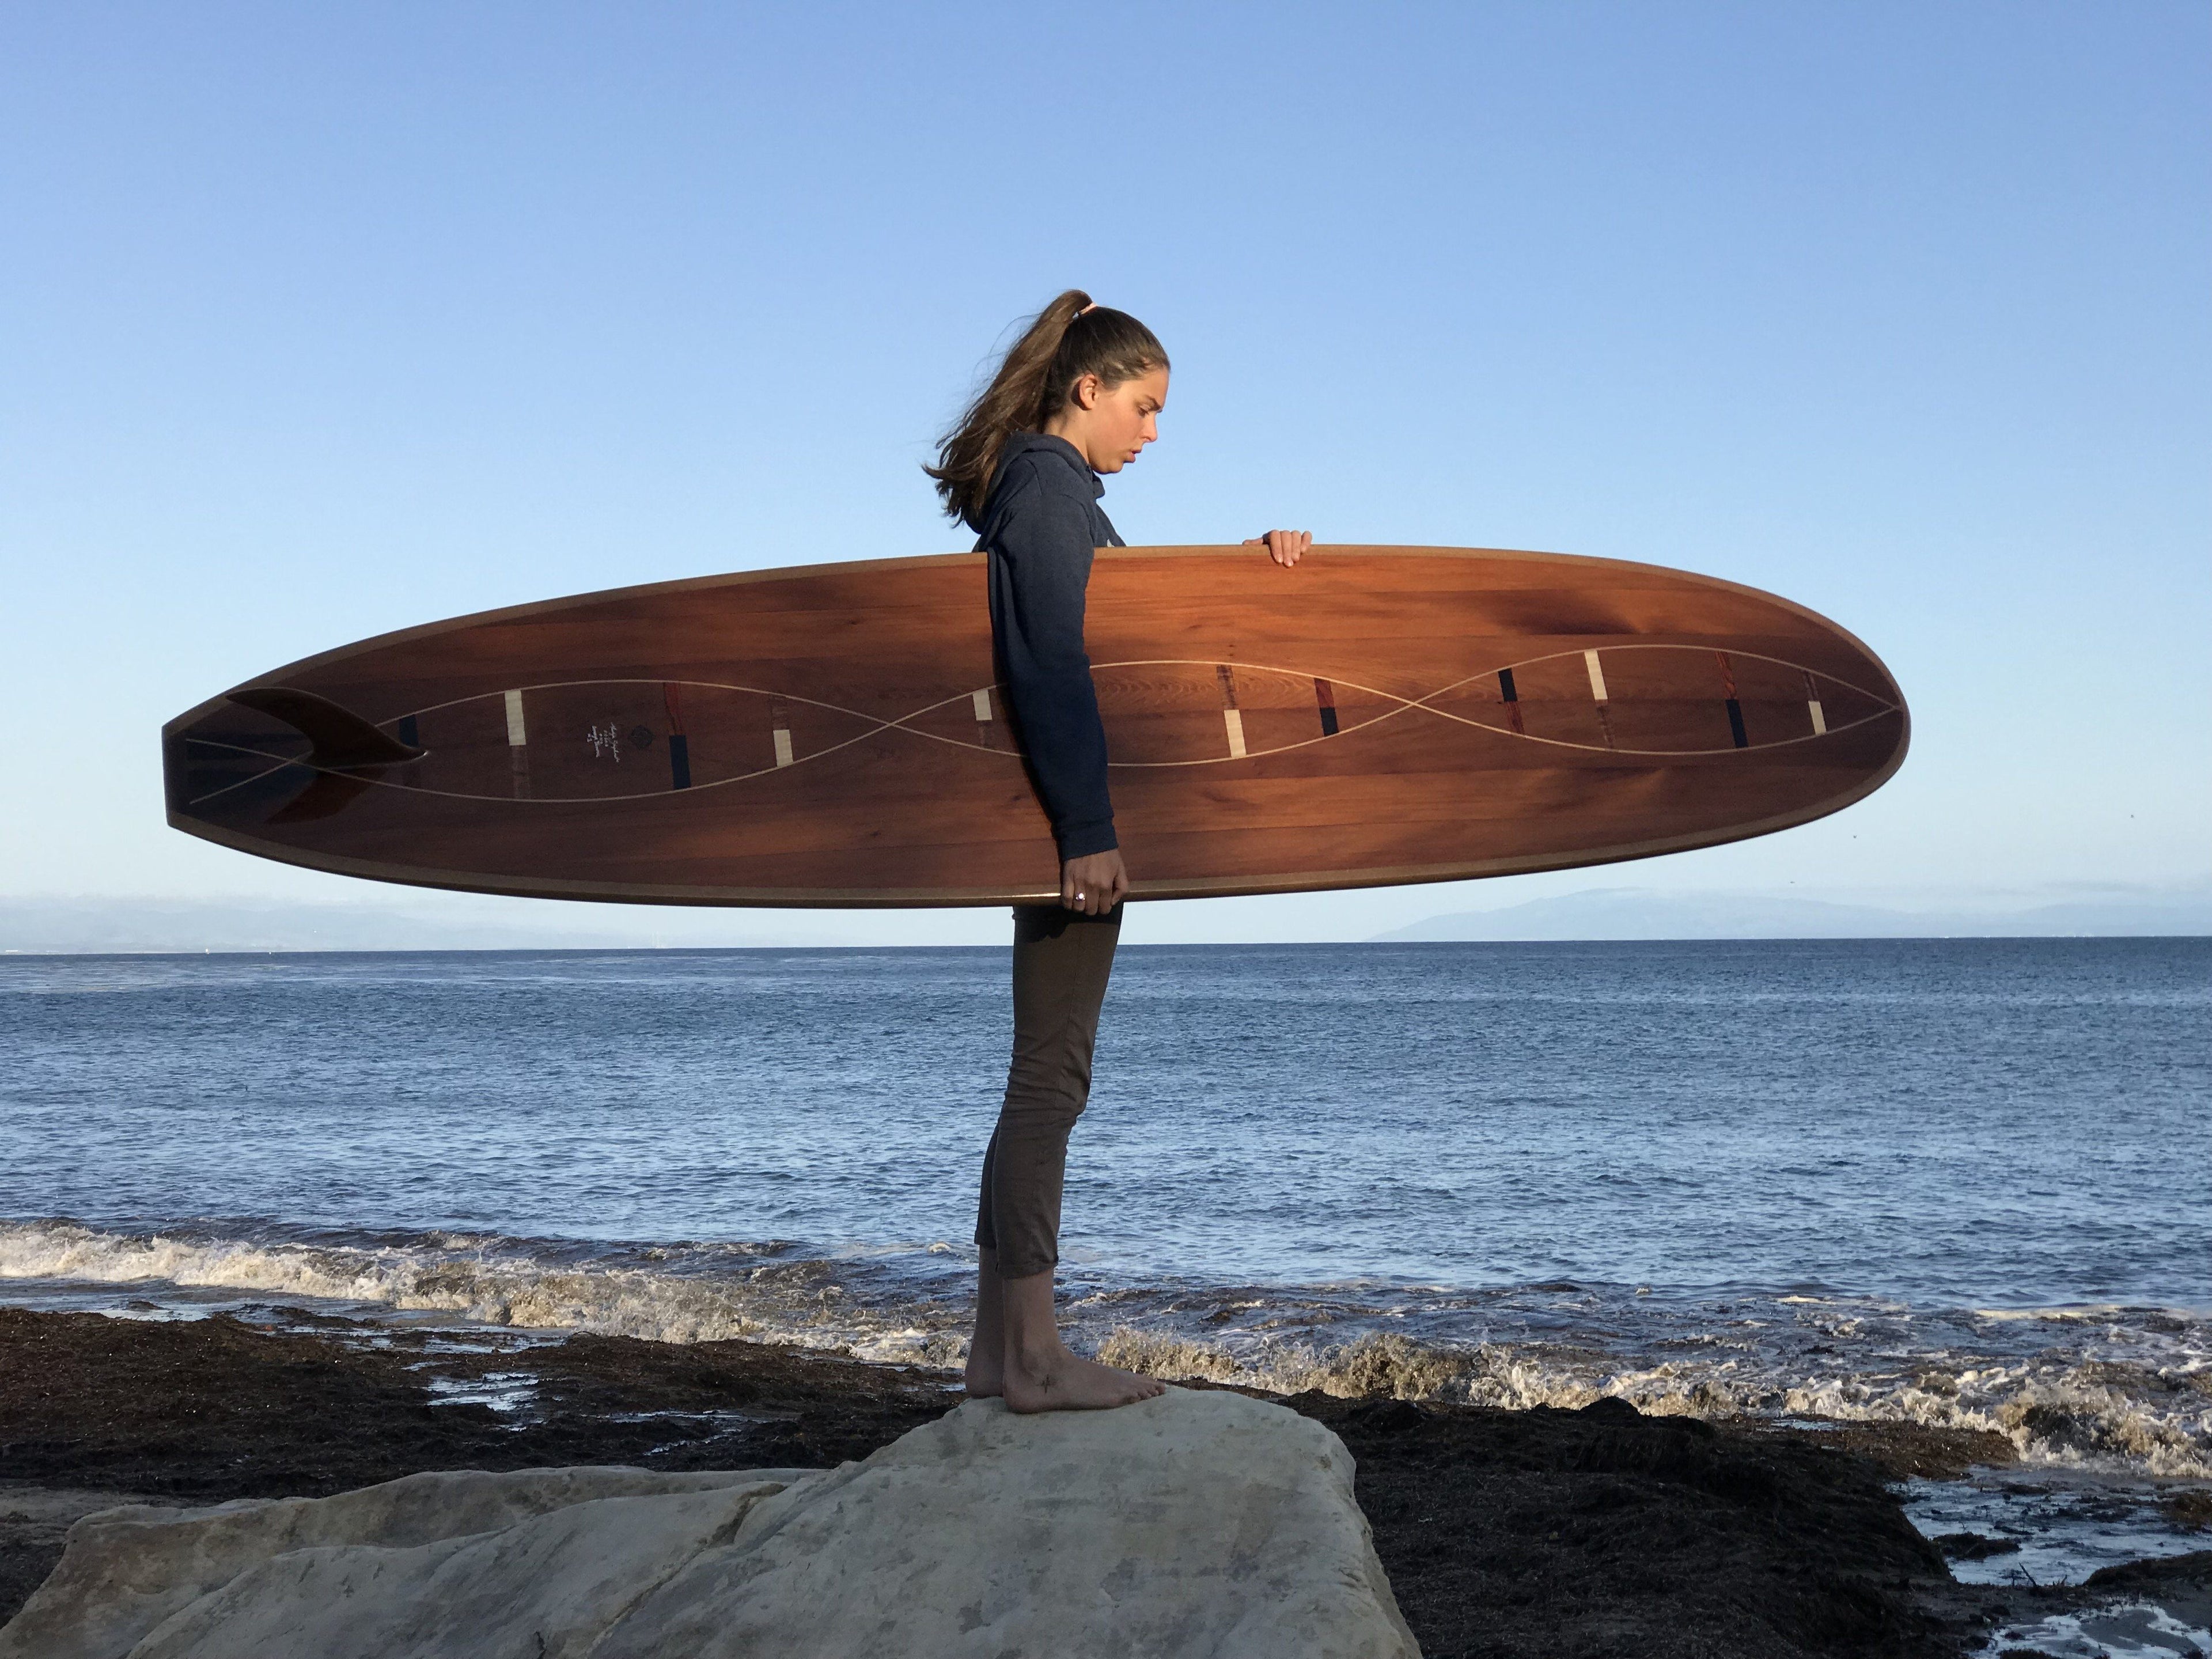 Laybourn Sunburst Flyer Paddle Board 9'6” – Ventana Surfboards